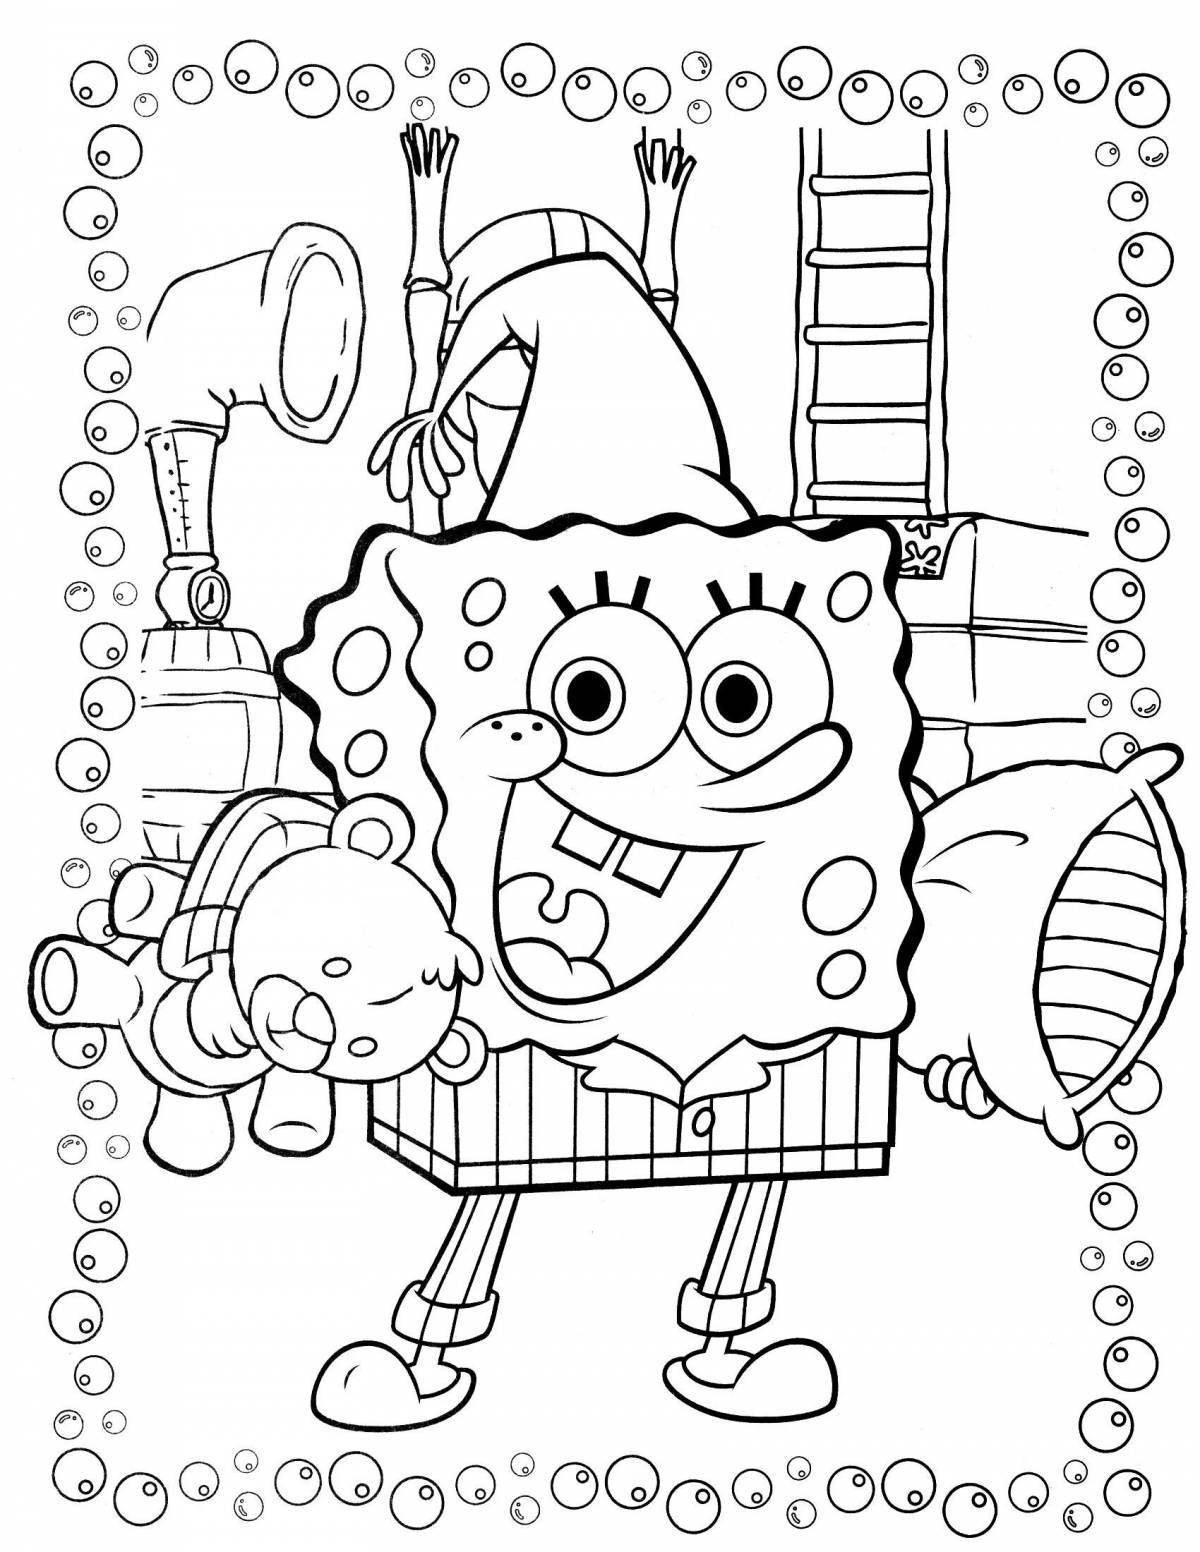 Creative spongebob coloring book for kids